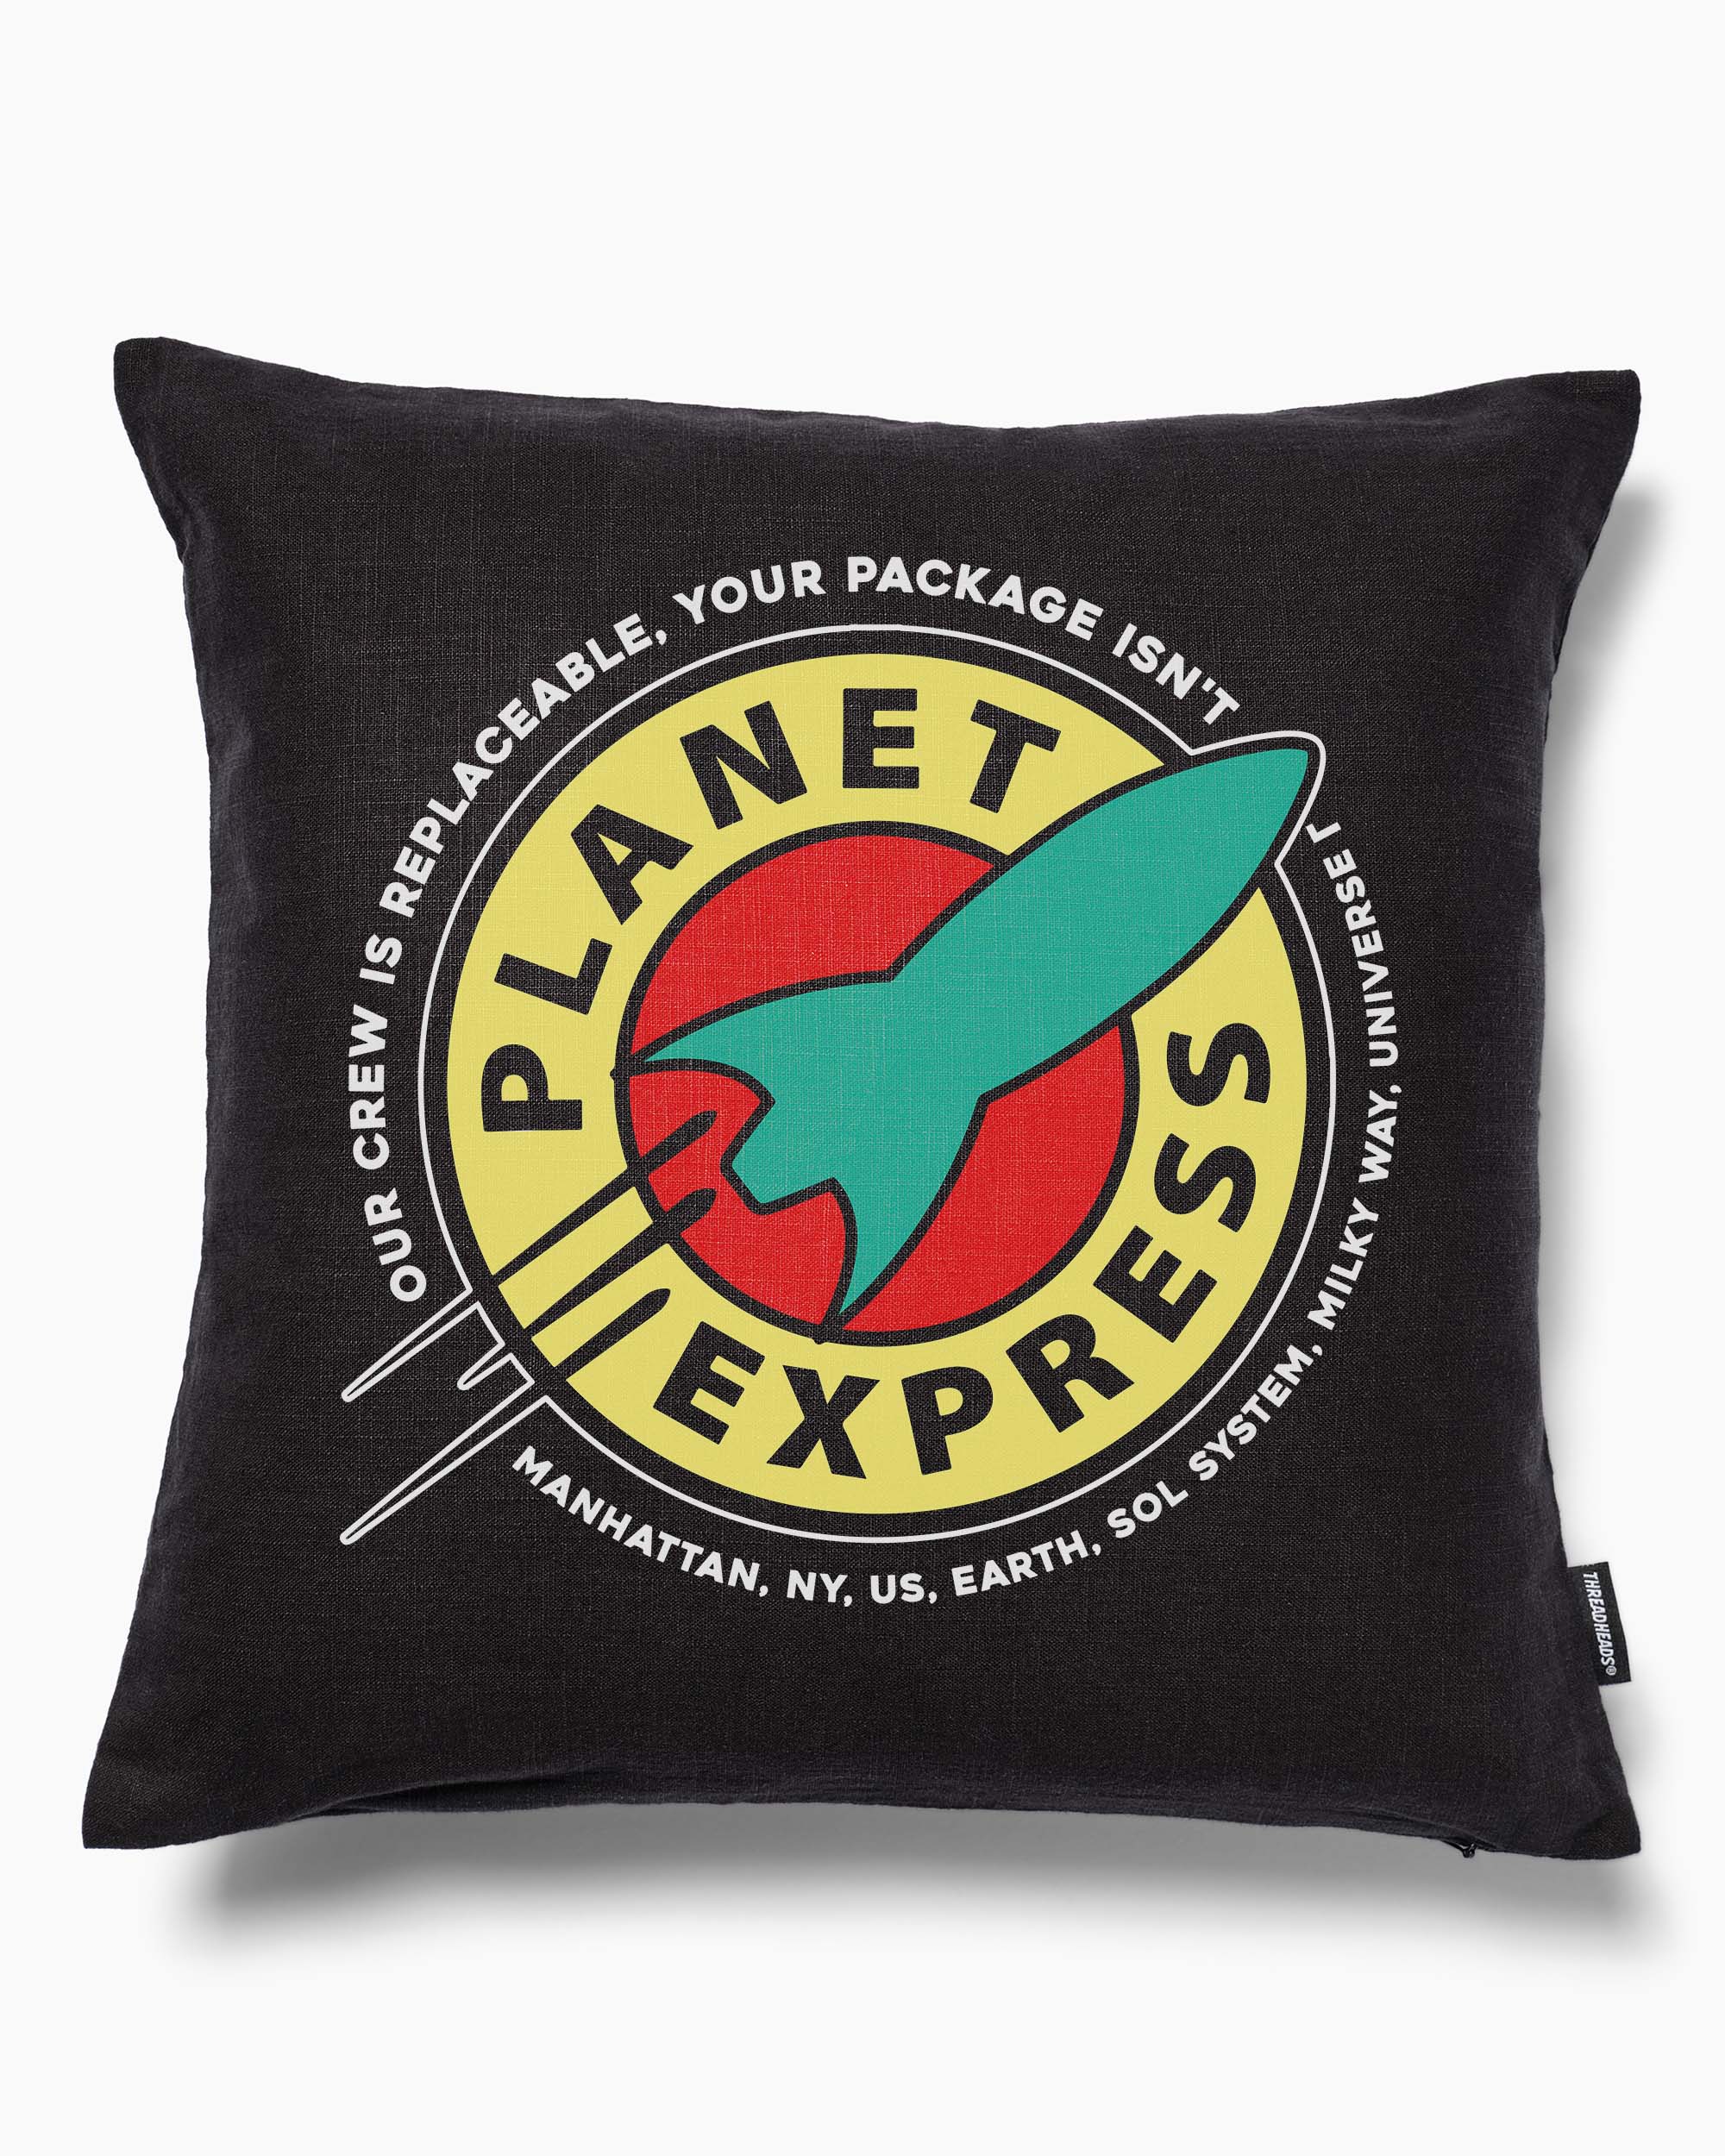 Planet Express Cushion